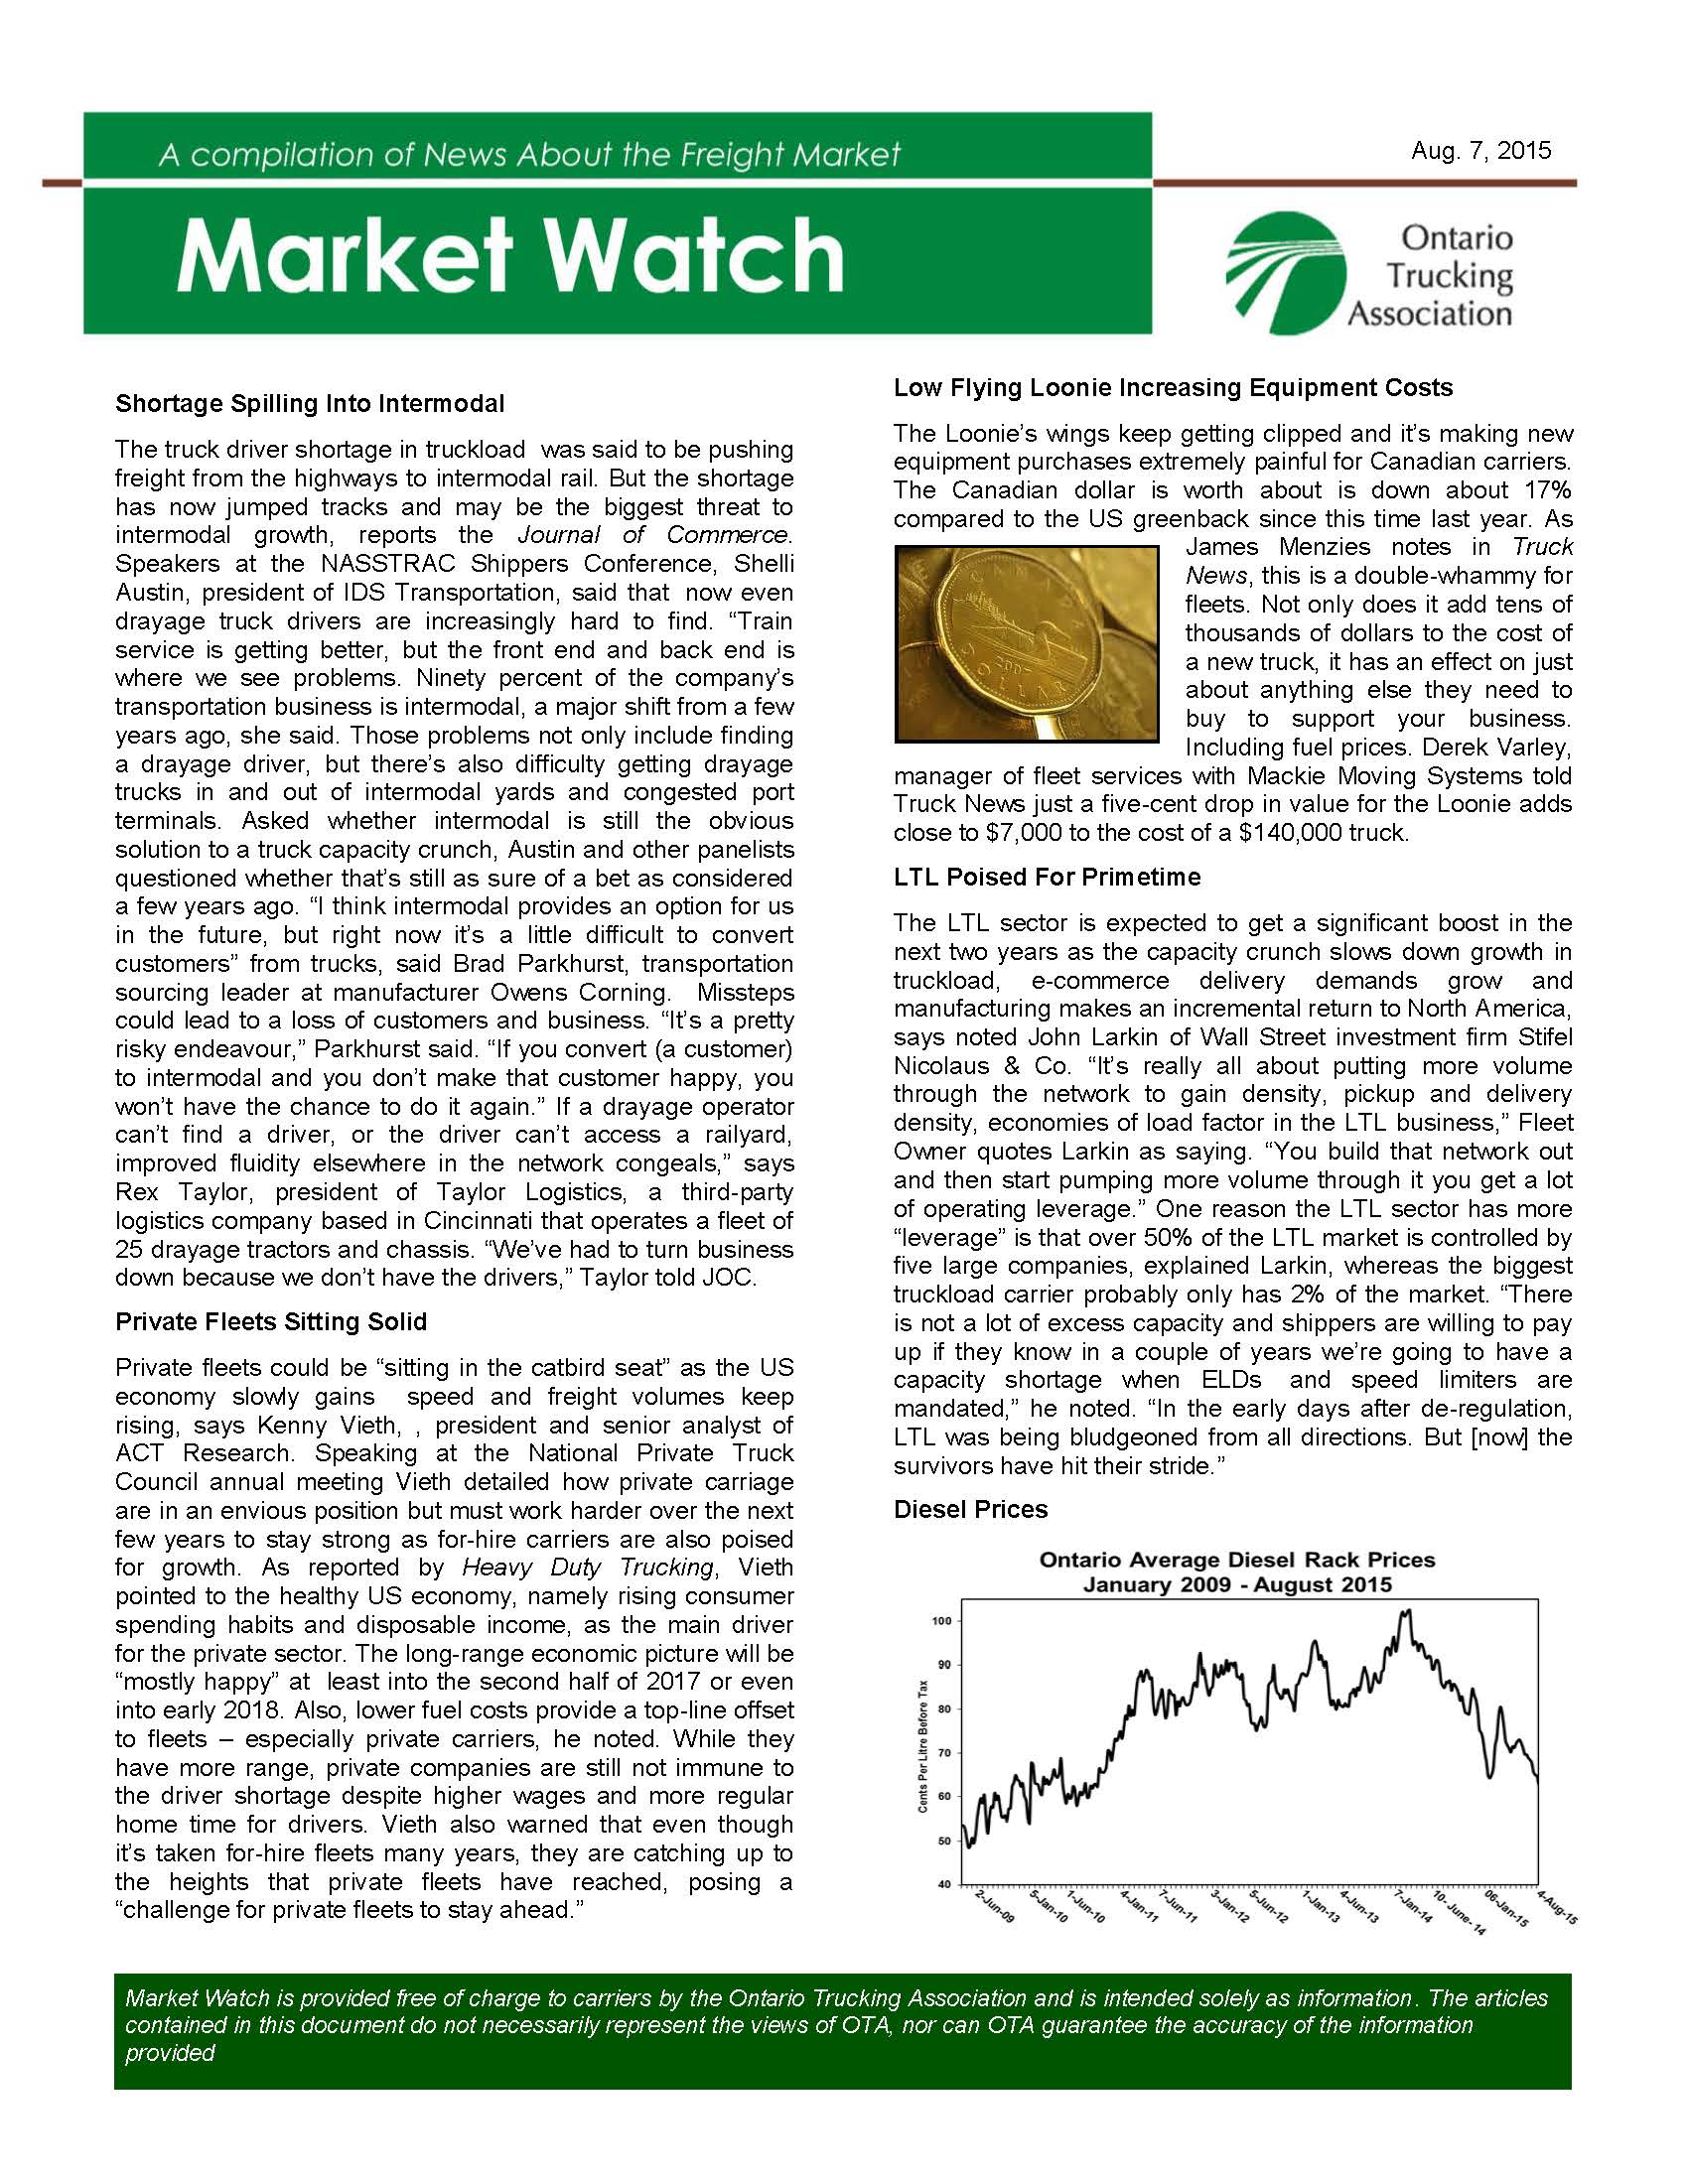 OTA Market Watch Newsletter